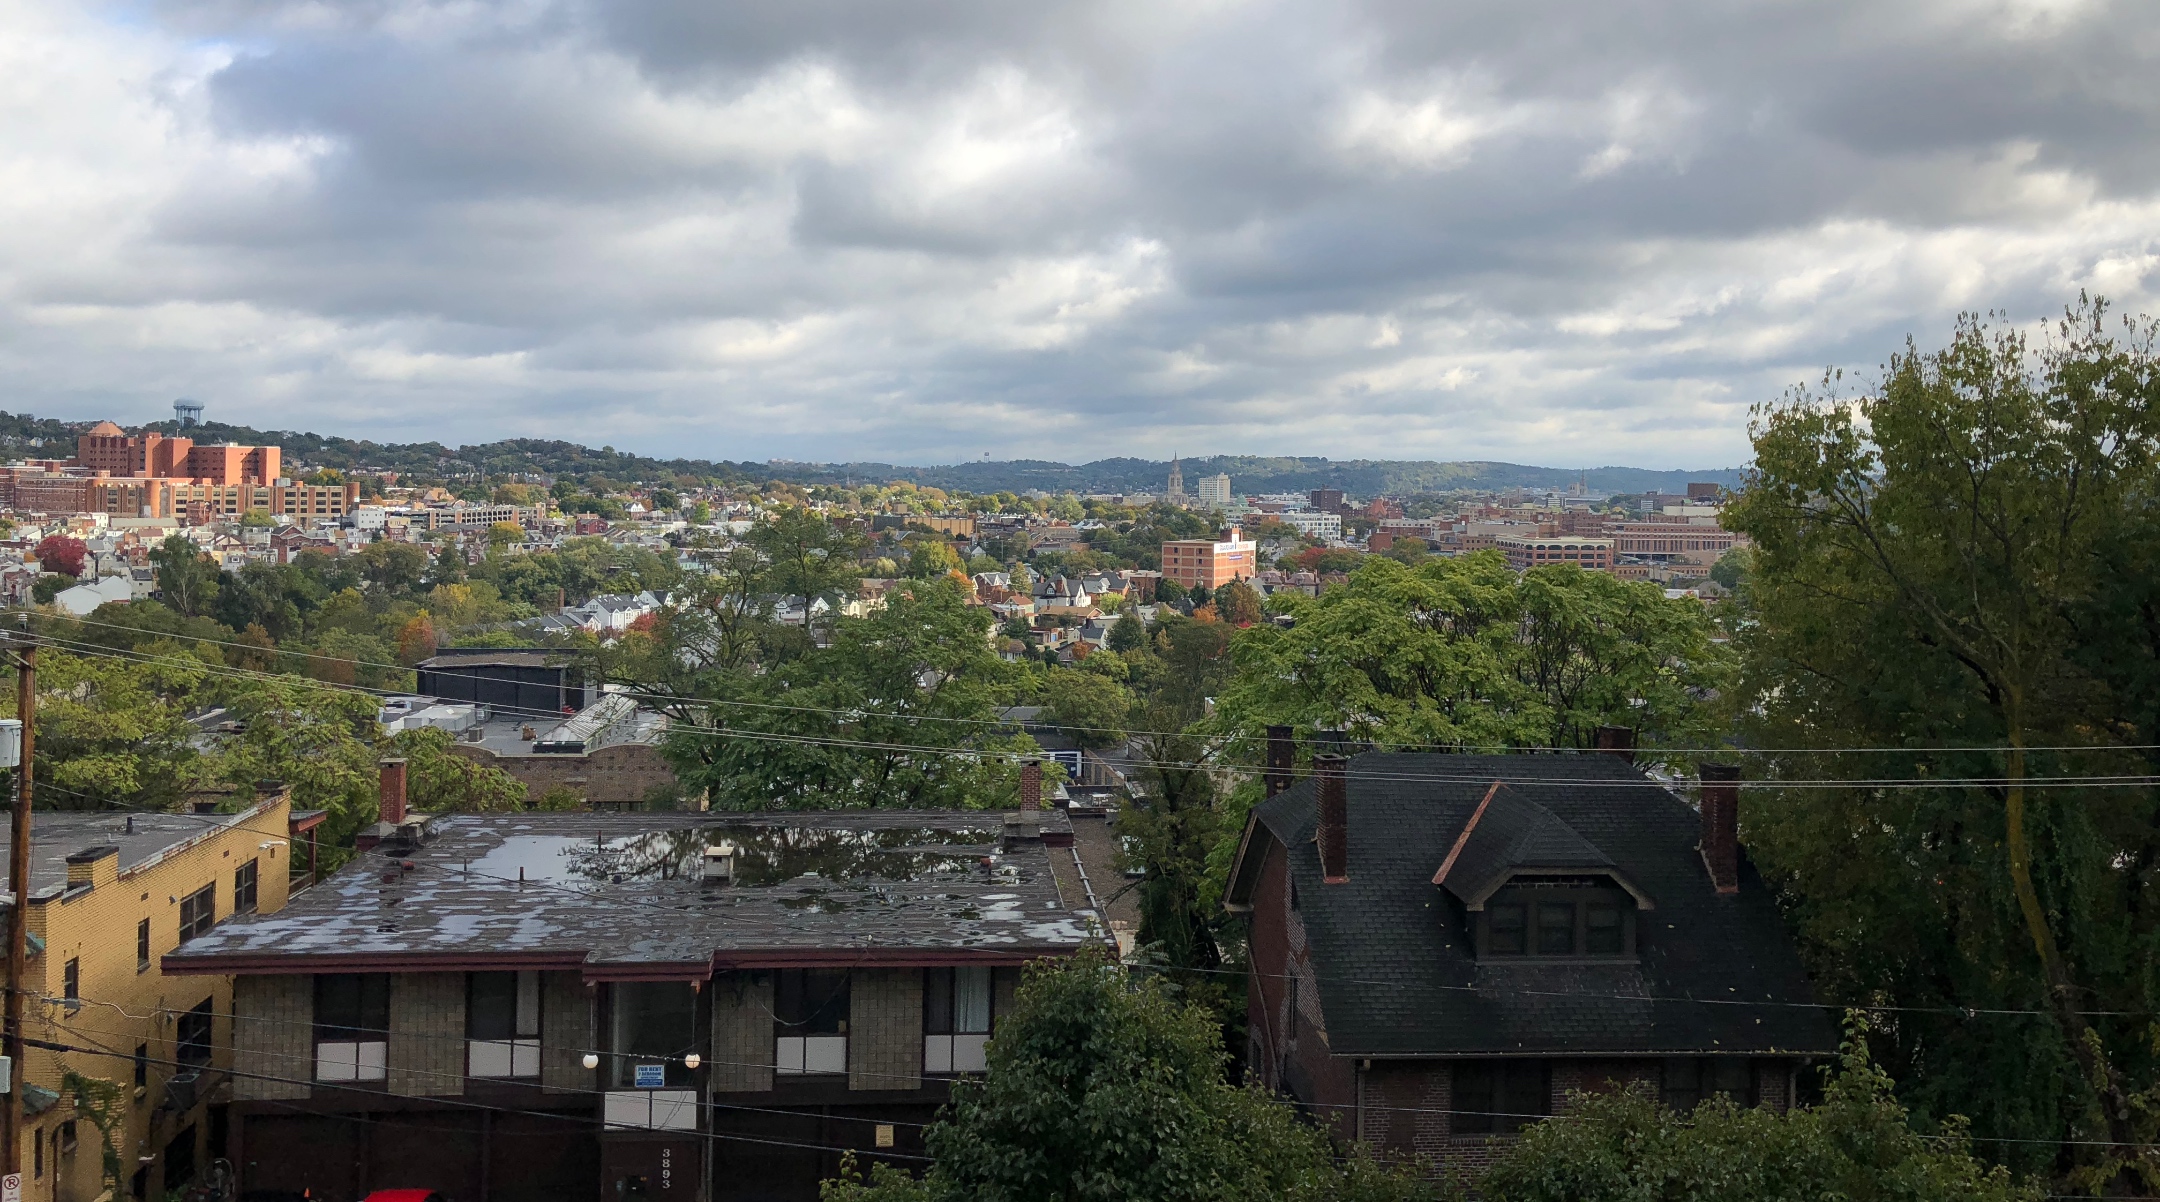 Leaving Pittsburgh, Oct. 29, 2018. (Ron Kampeas)